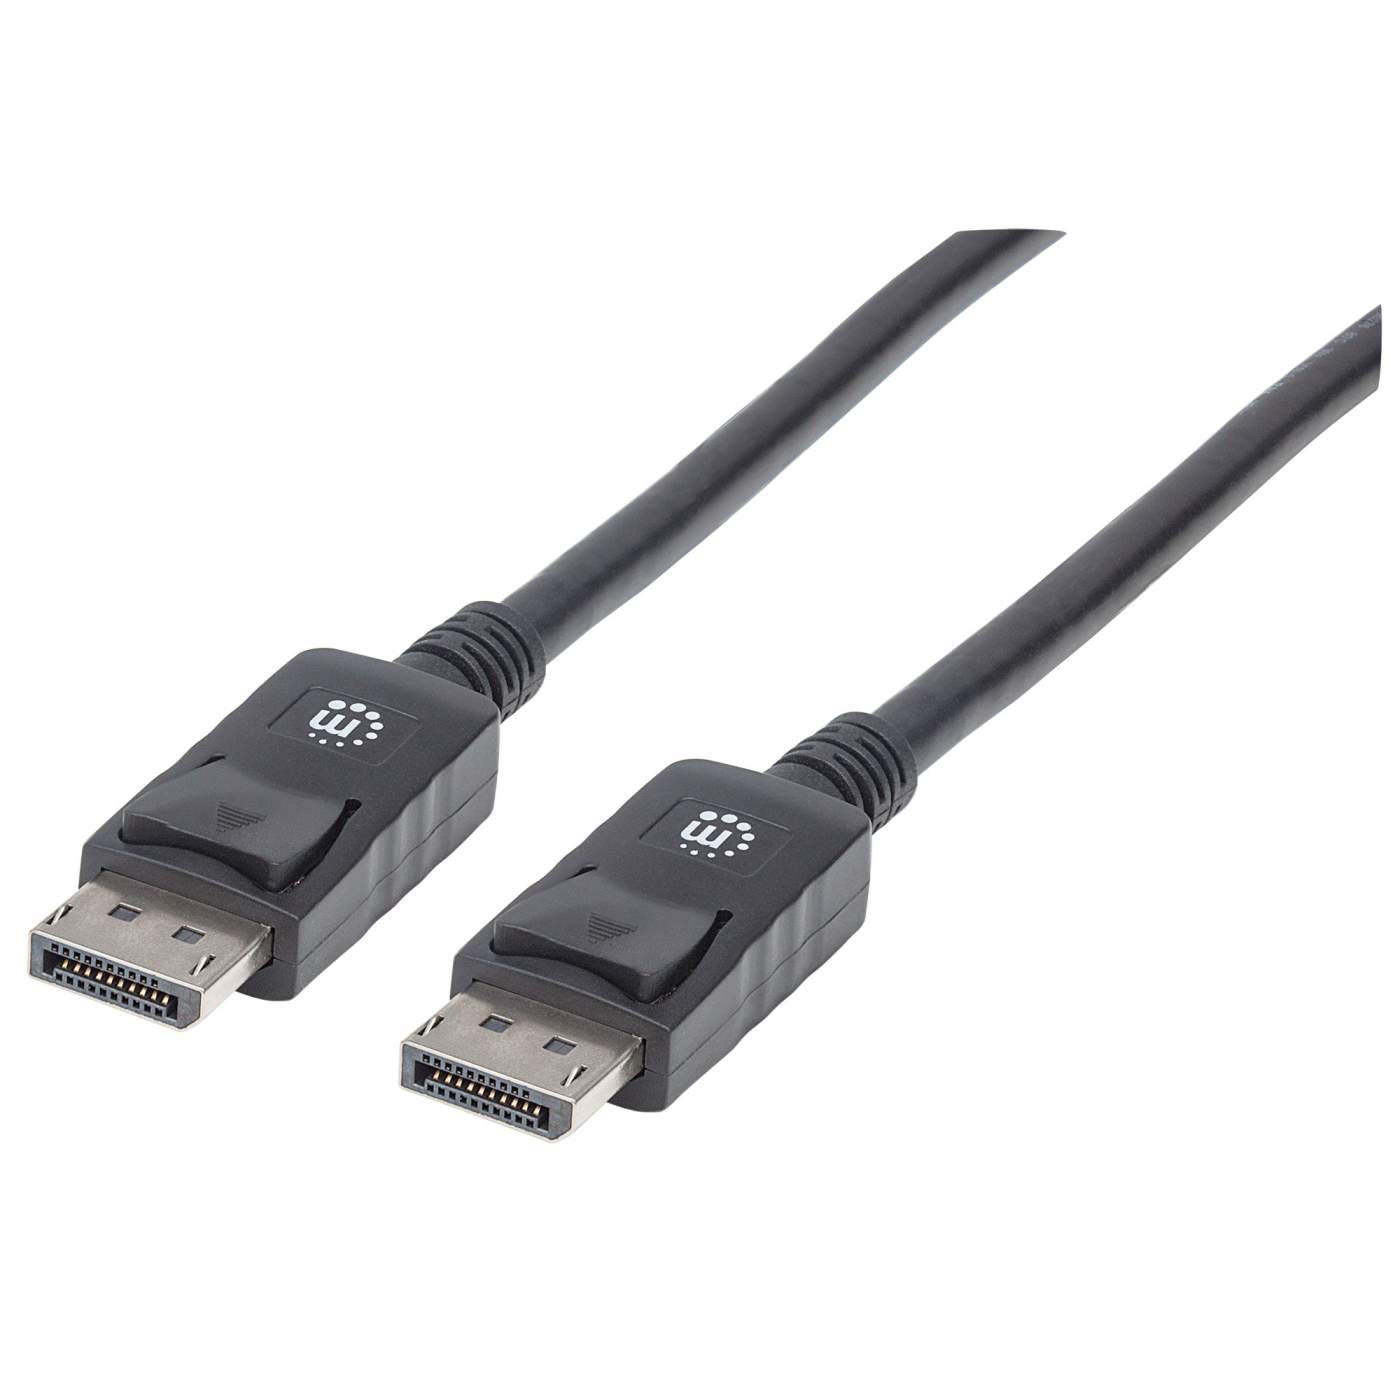 Comprar Vention DisplayPort a HDMI Cable 1080P @ 60Hz DP a HDMI Cable 4K Display  Port HDMI para PC portátil HDTV proyector DP a HDMI Cable